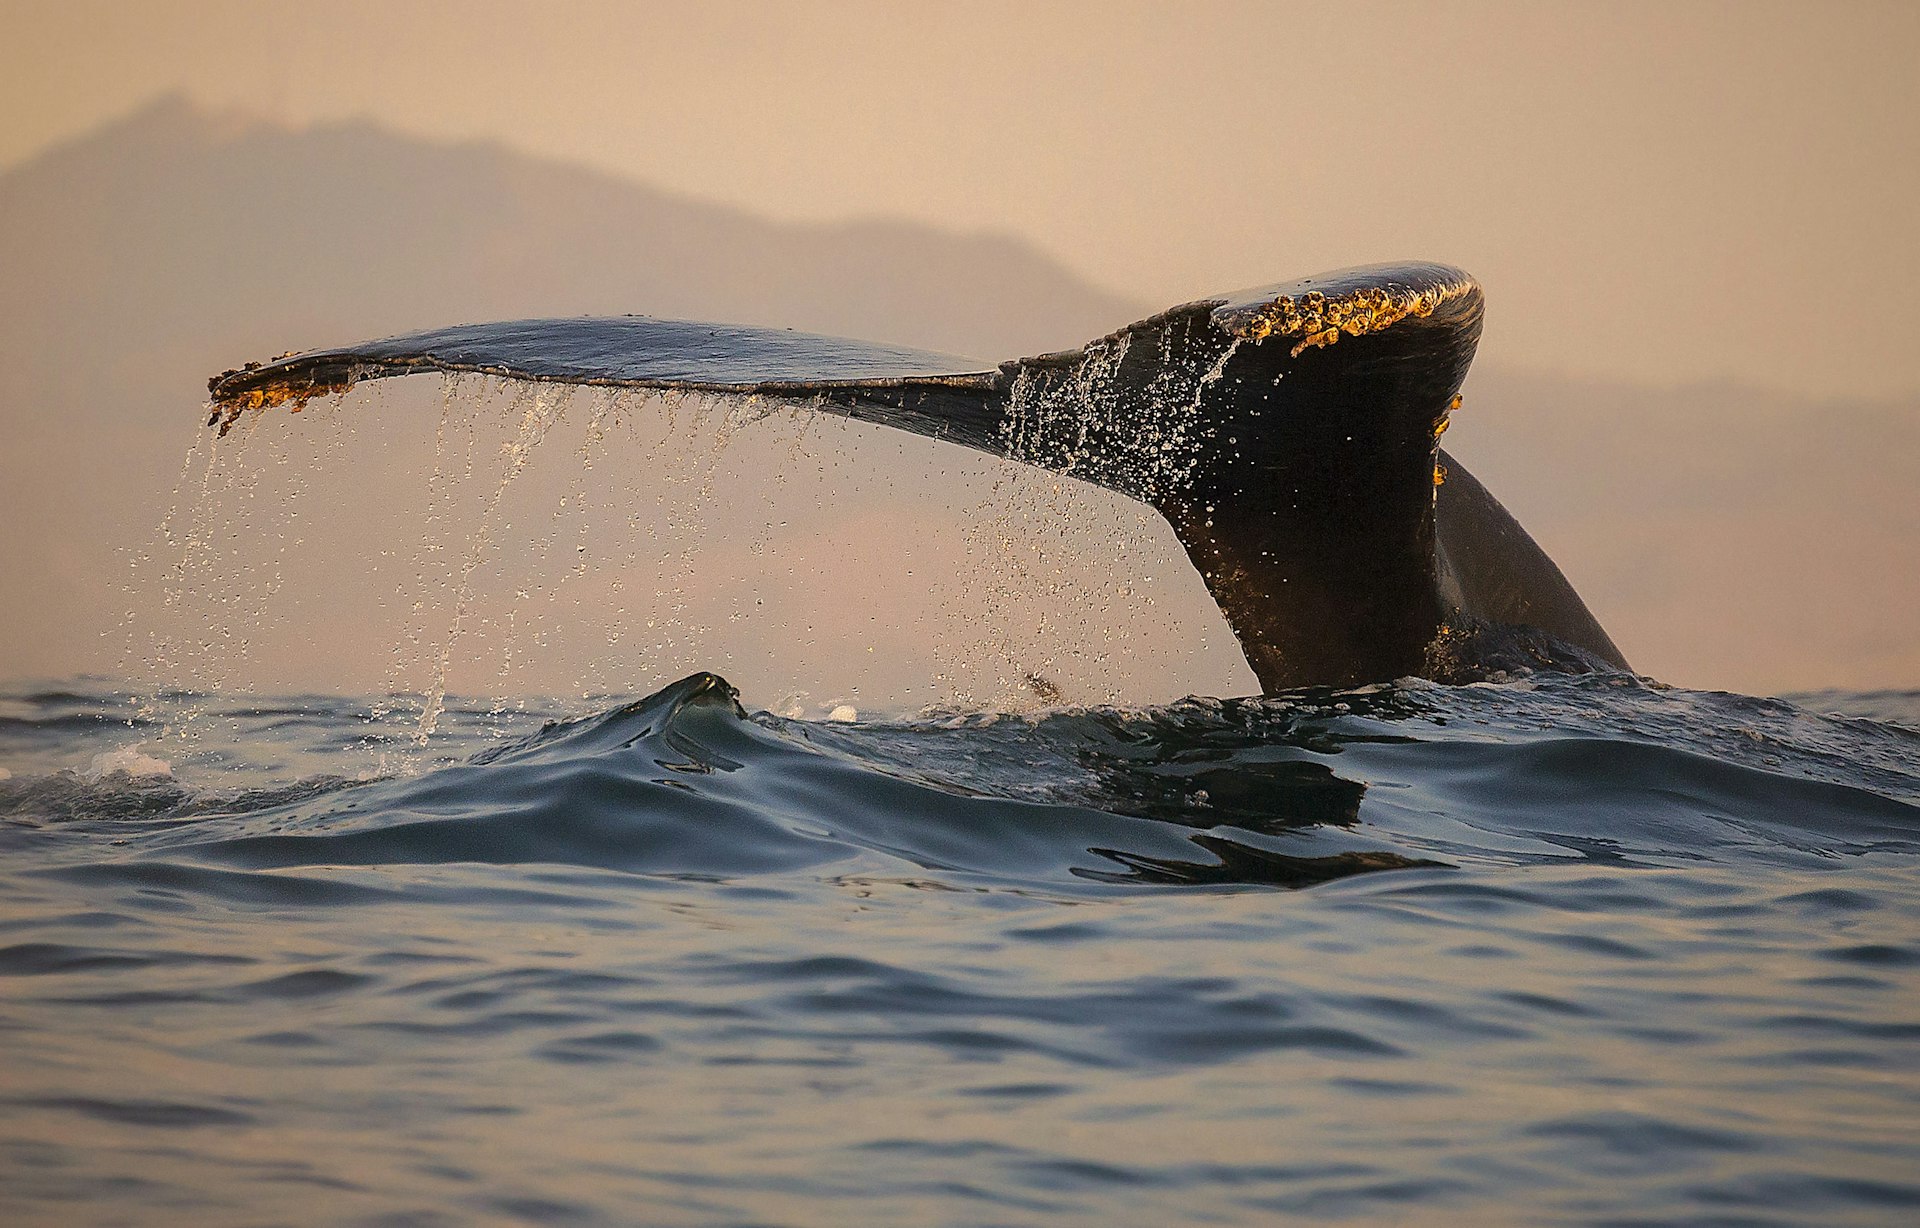 Humpback Whale at Big Sur